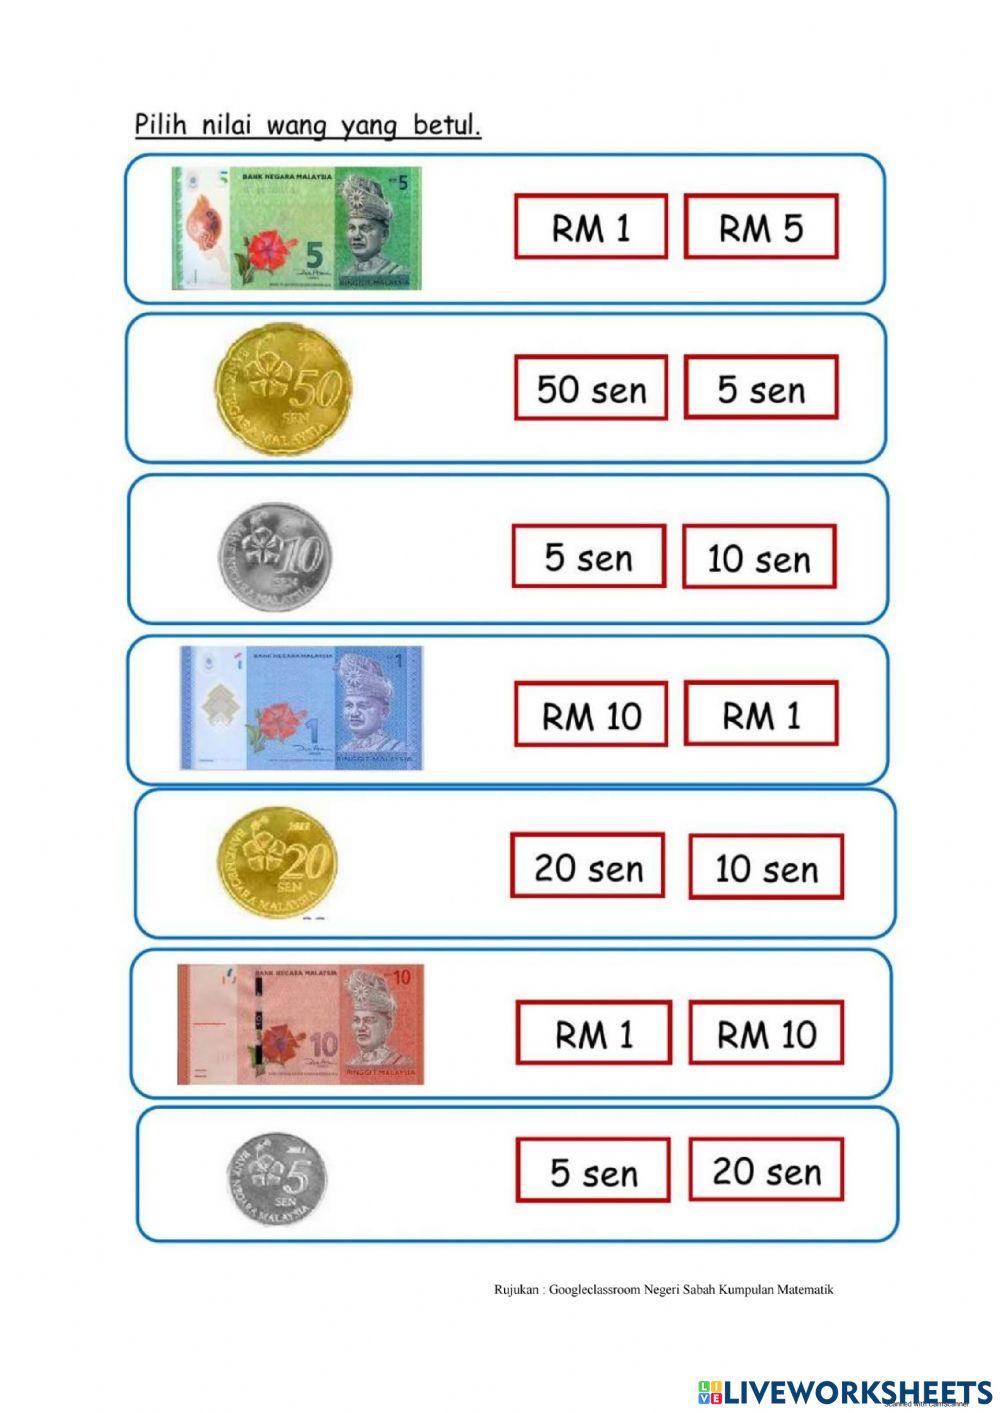 Mata wang malaysia